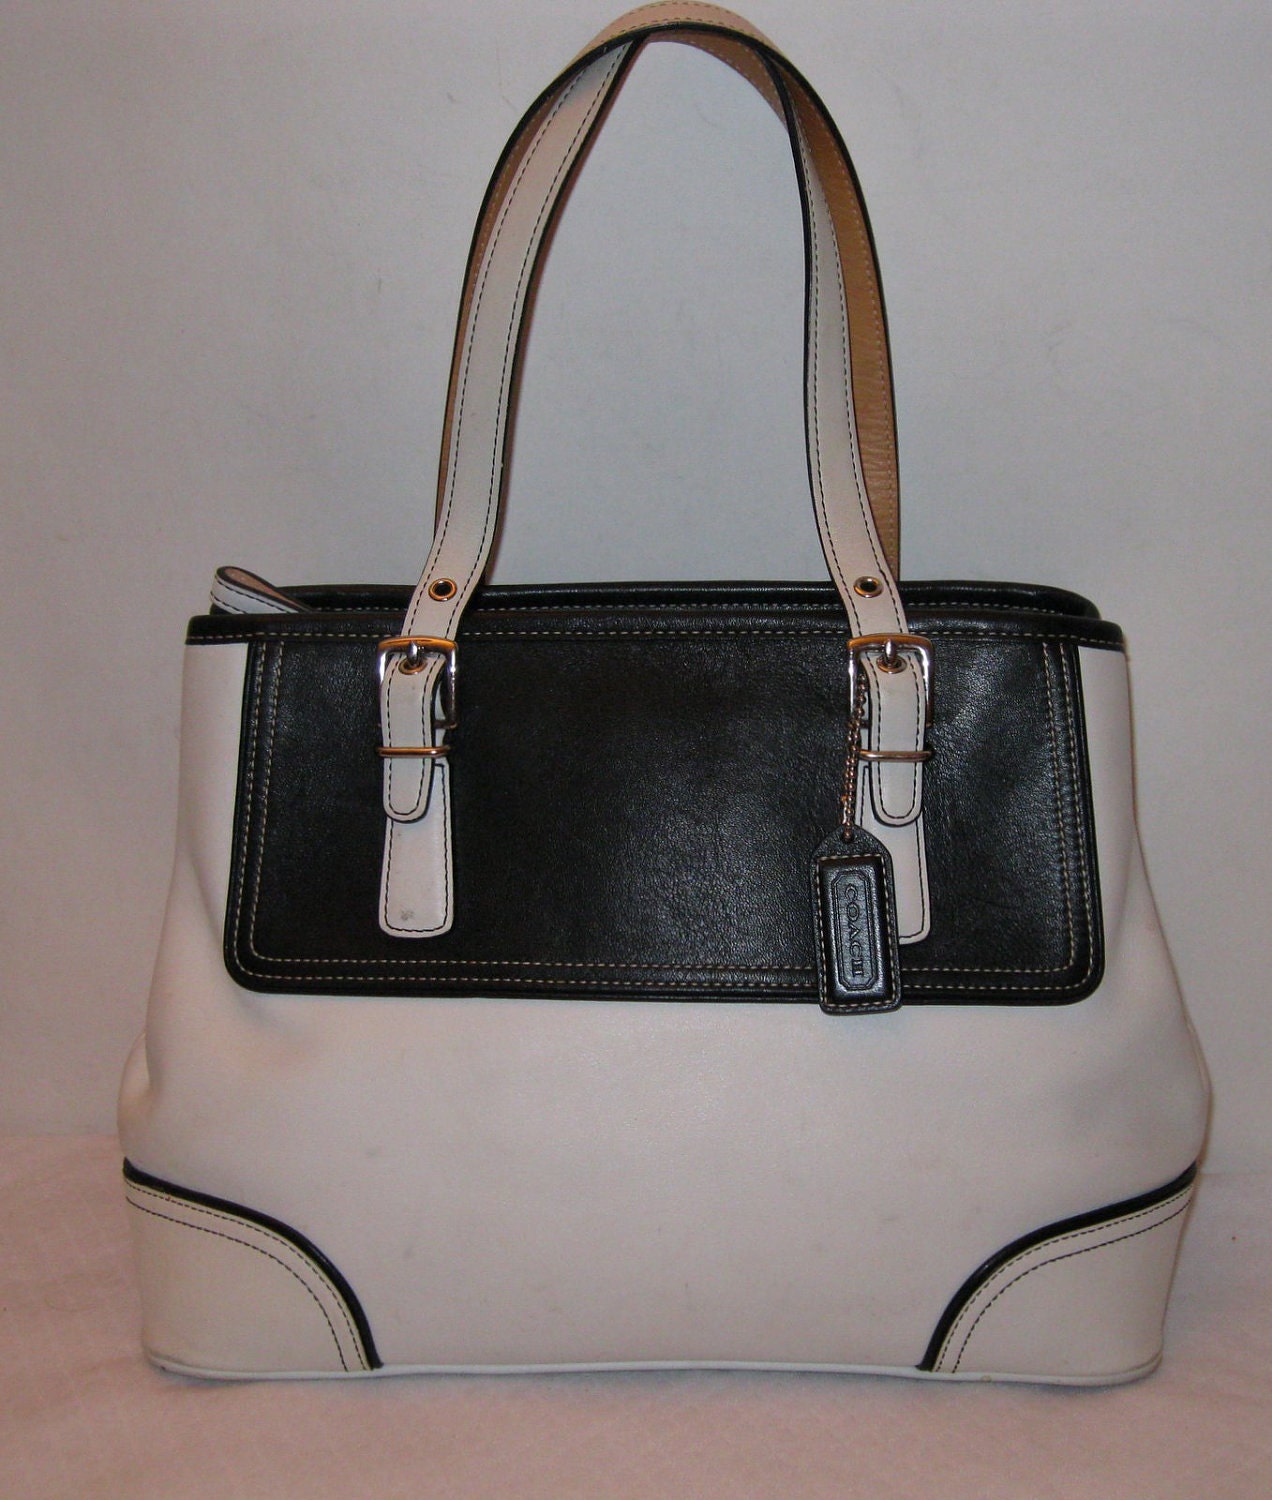 Authentic Coach Hamilton satchel bag purse in thick genuine leather ...